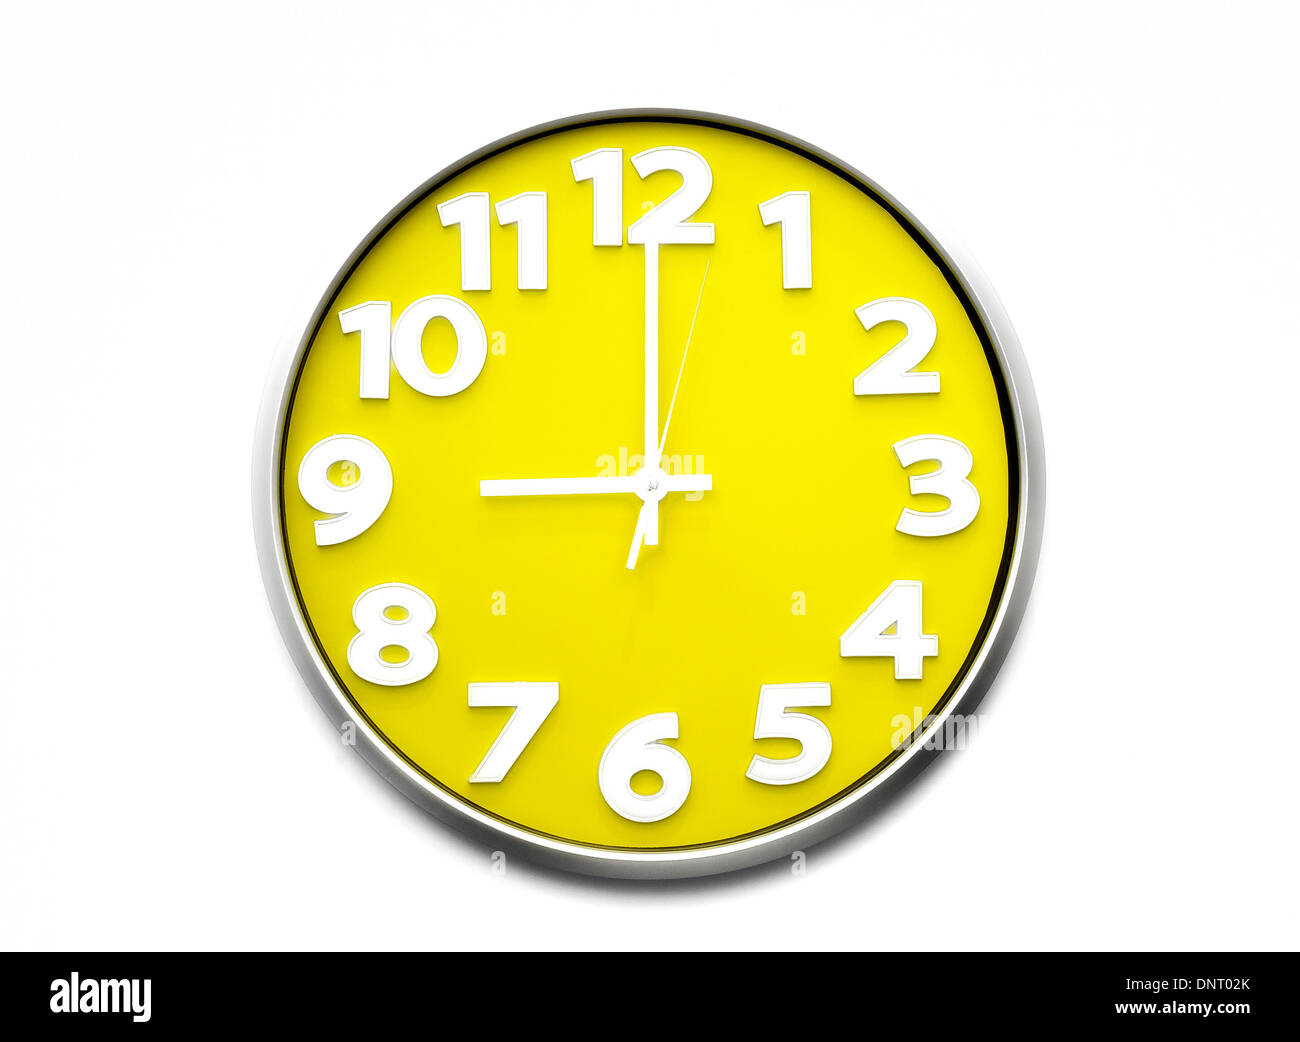 yellow clock face 9 o'clock the clock strikes nine 21.00 hours Stock Photo  - Alamy